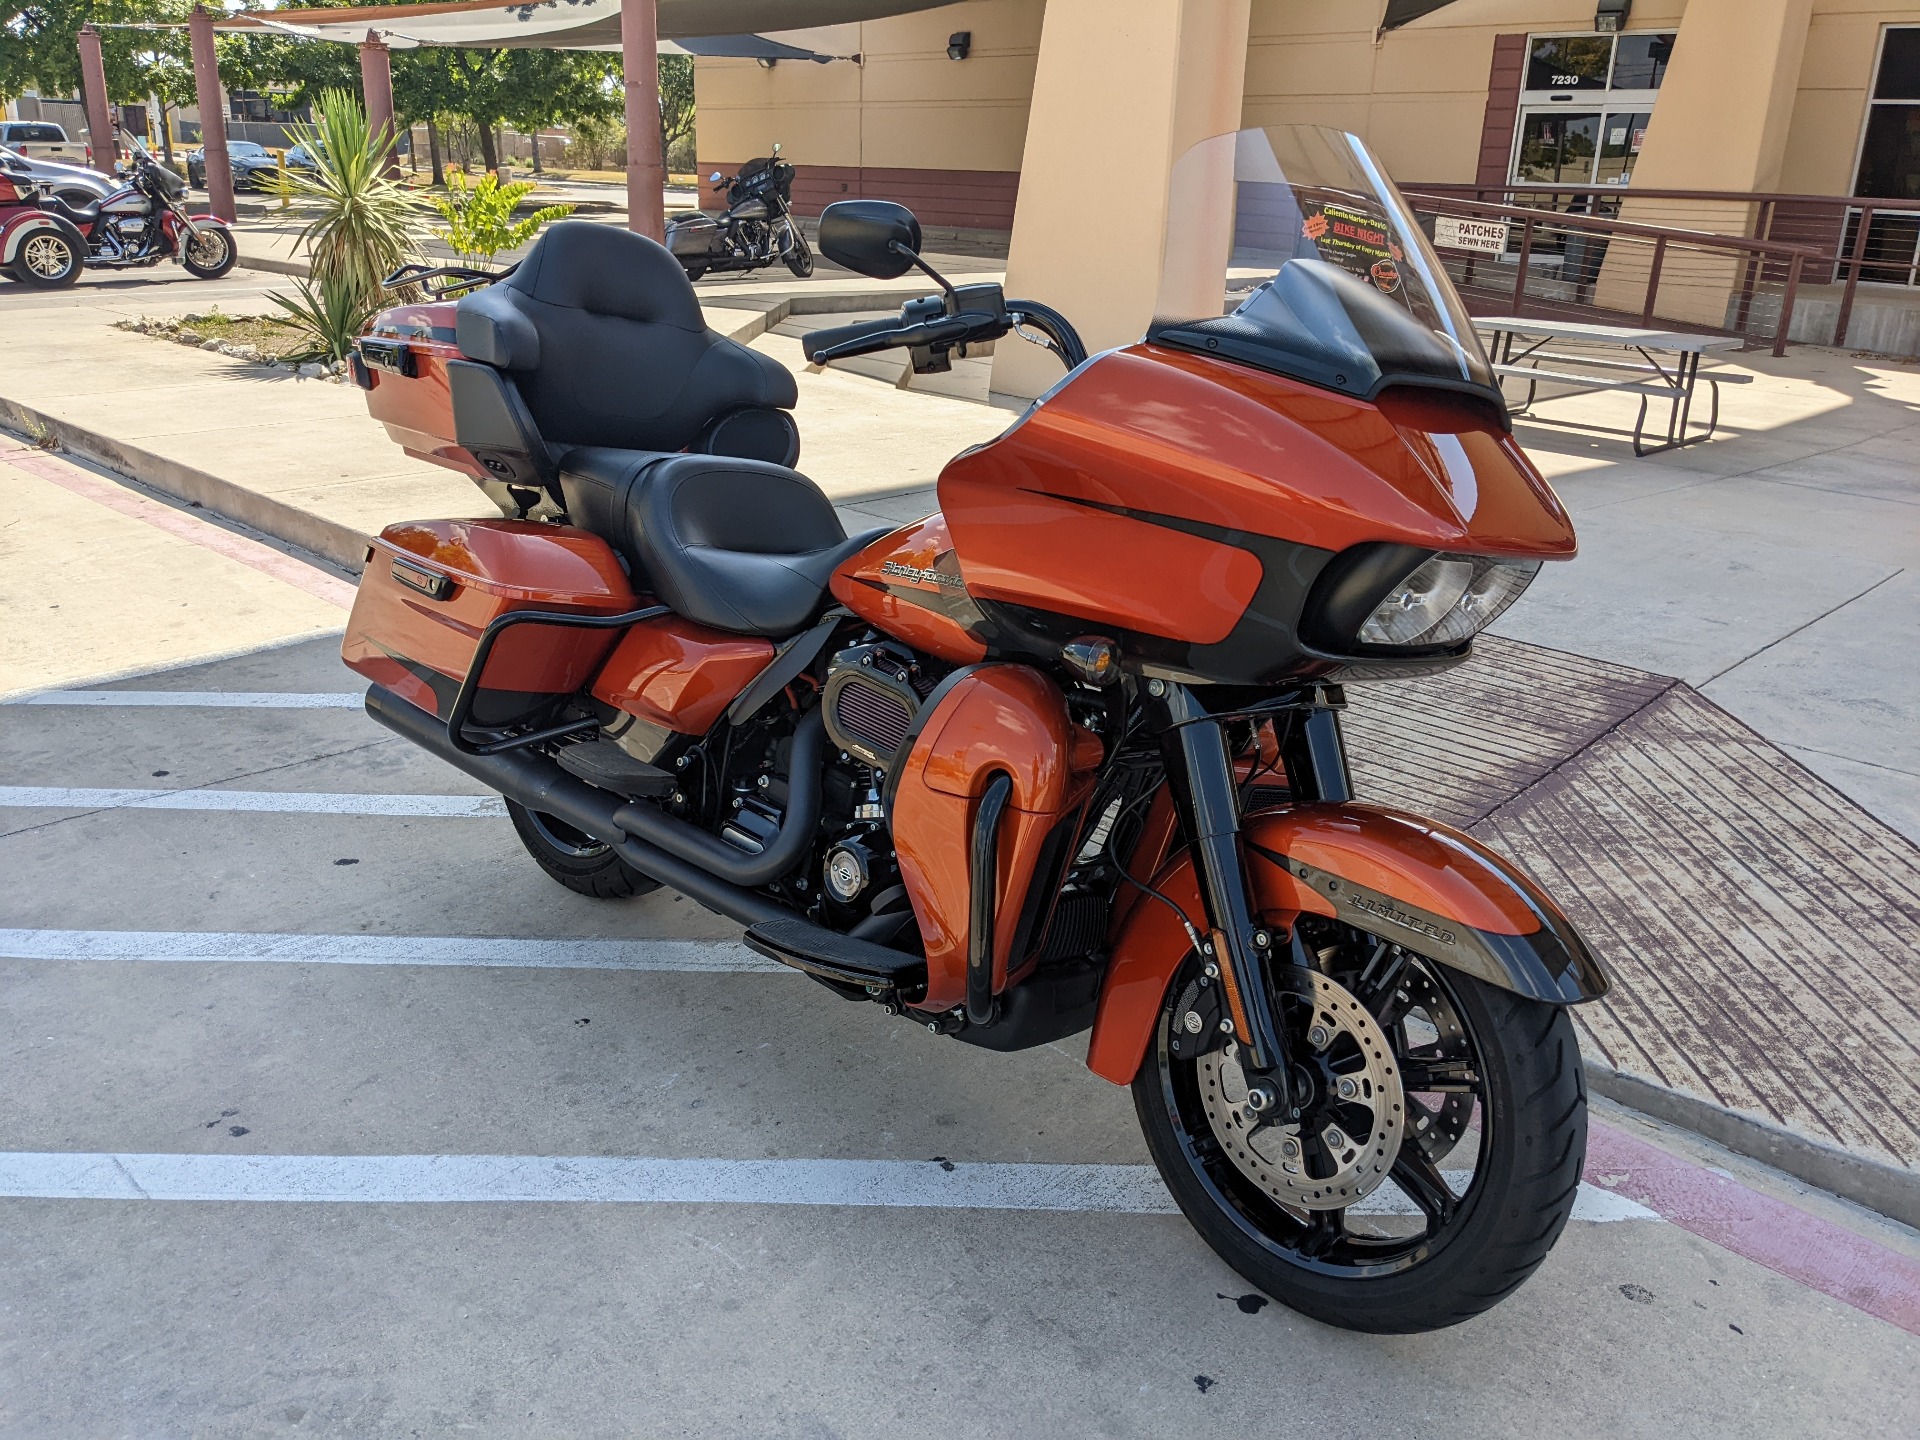 2020 Harley-Davidson Road Glide® Limited in San Antonio, Texas - Photo 2